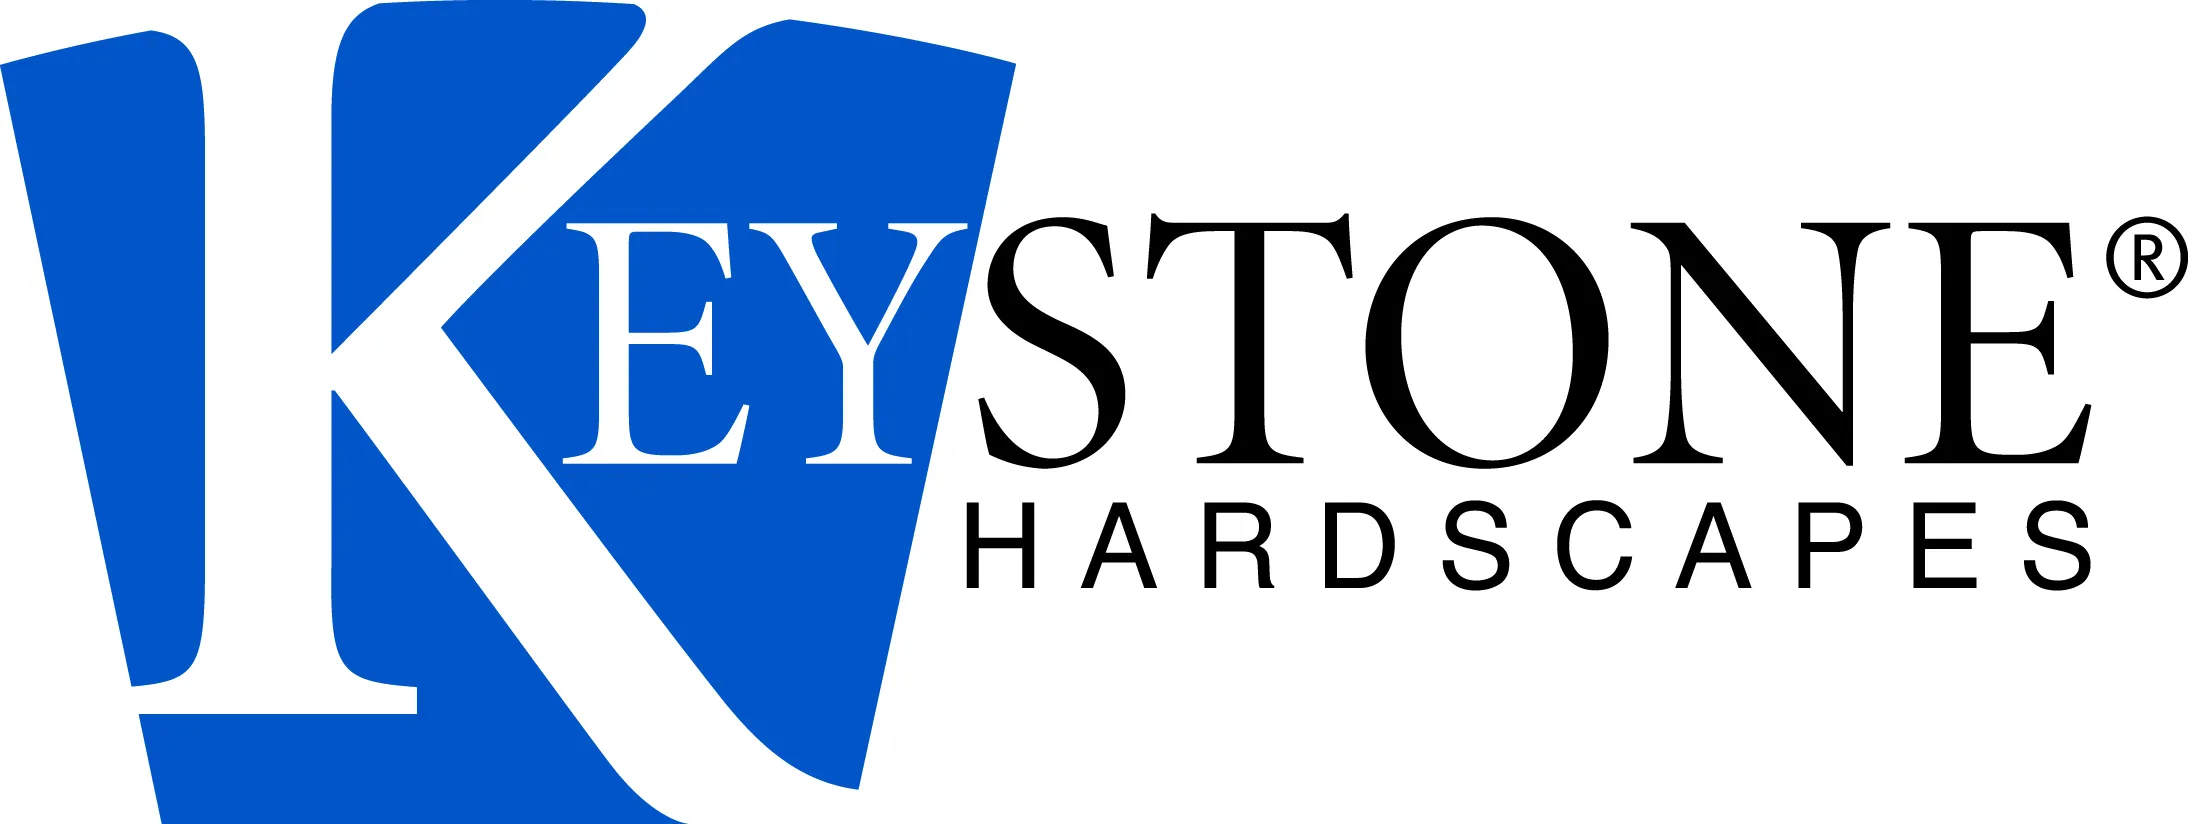 Keystone : Brand Short Description Type Here.